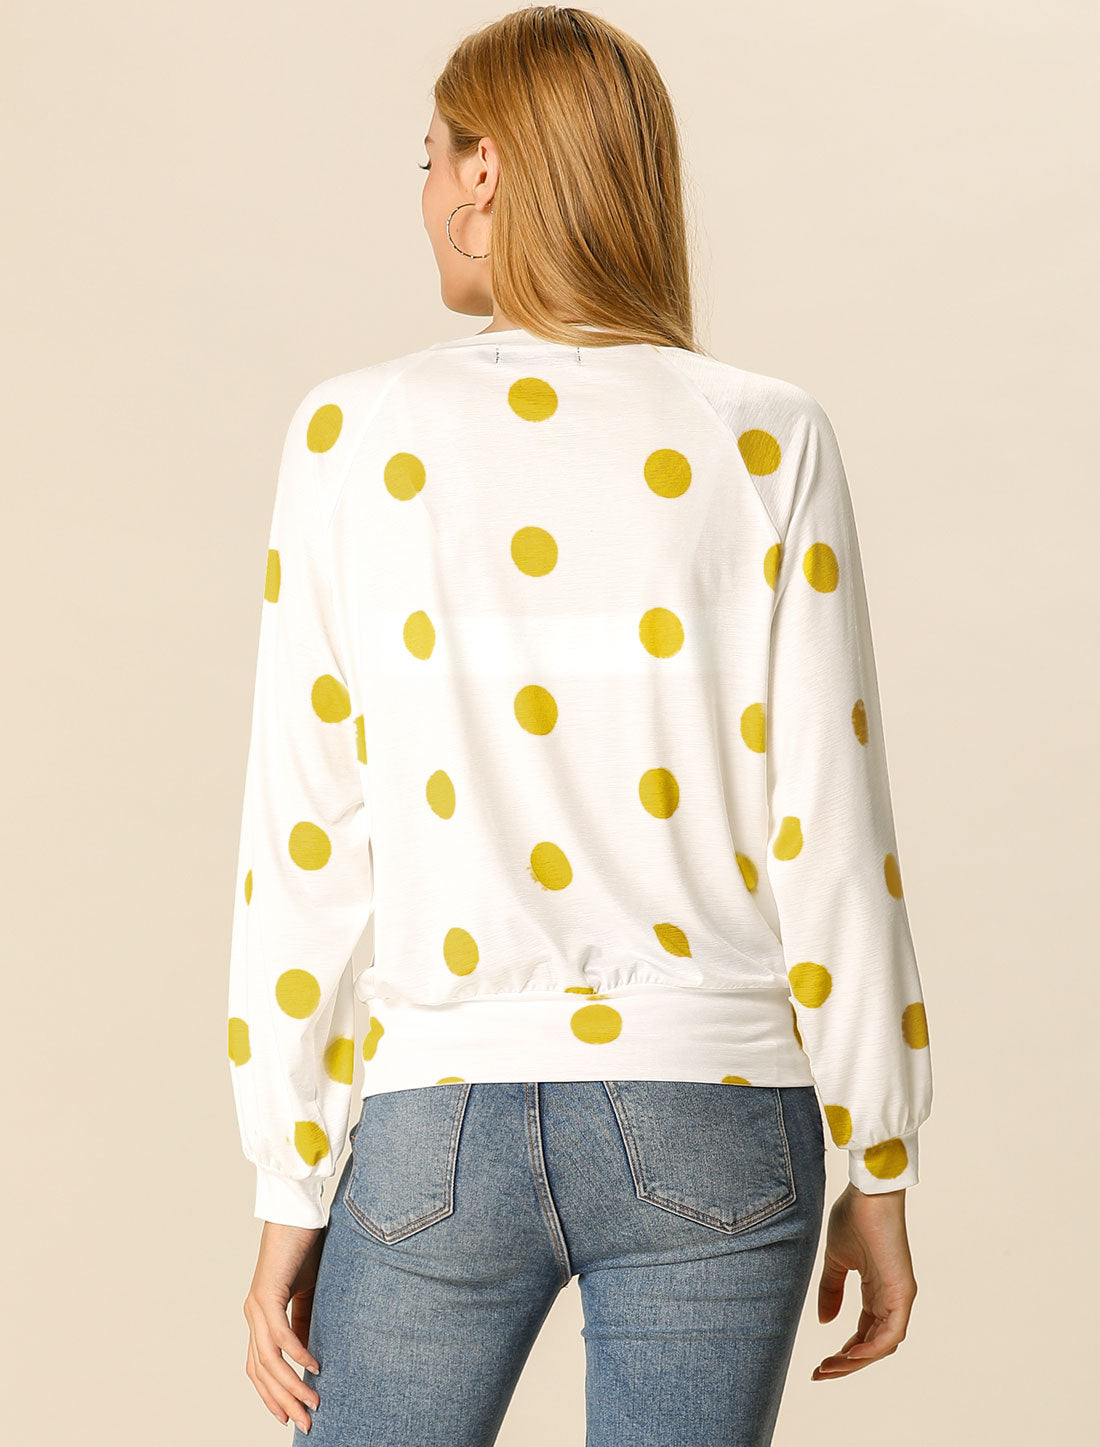 Allegra K Long Sleeve Soft T-shirt Blouse Casual Polka Dots Top